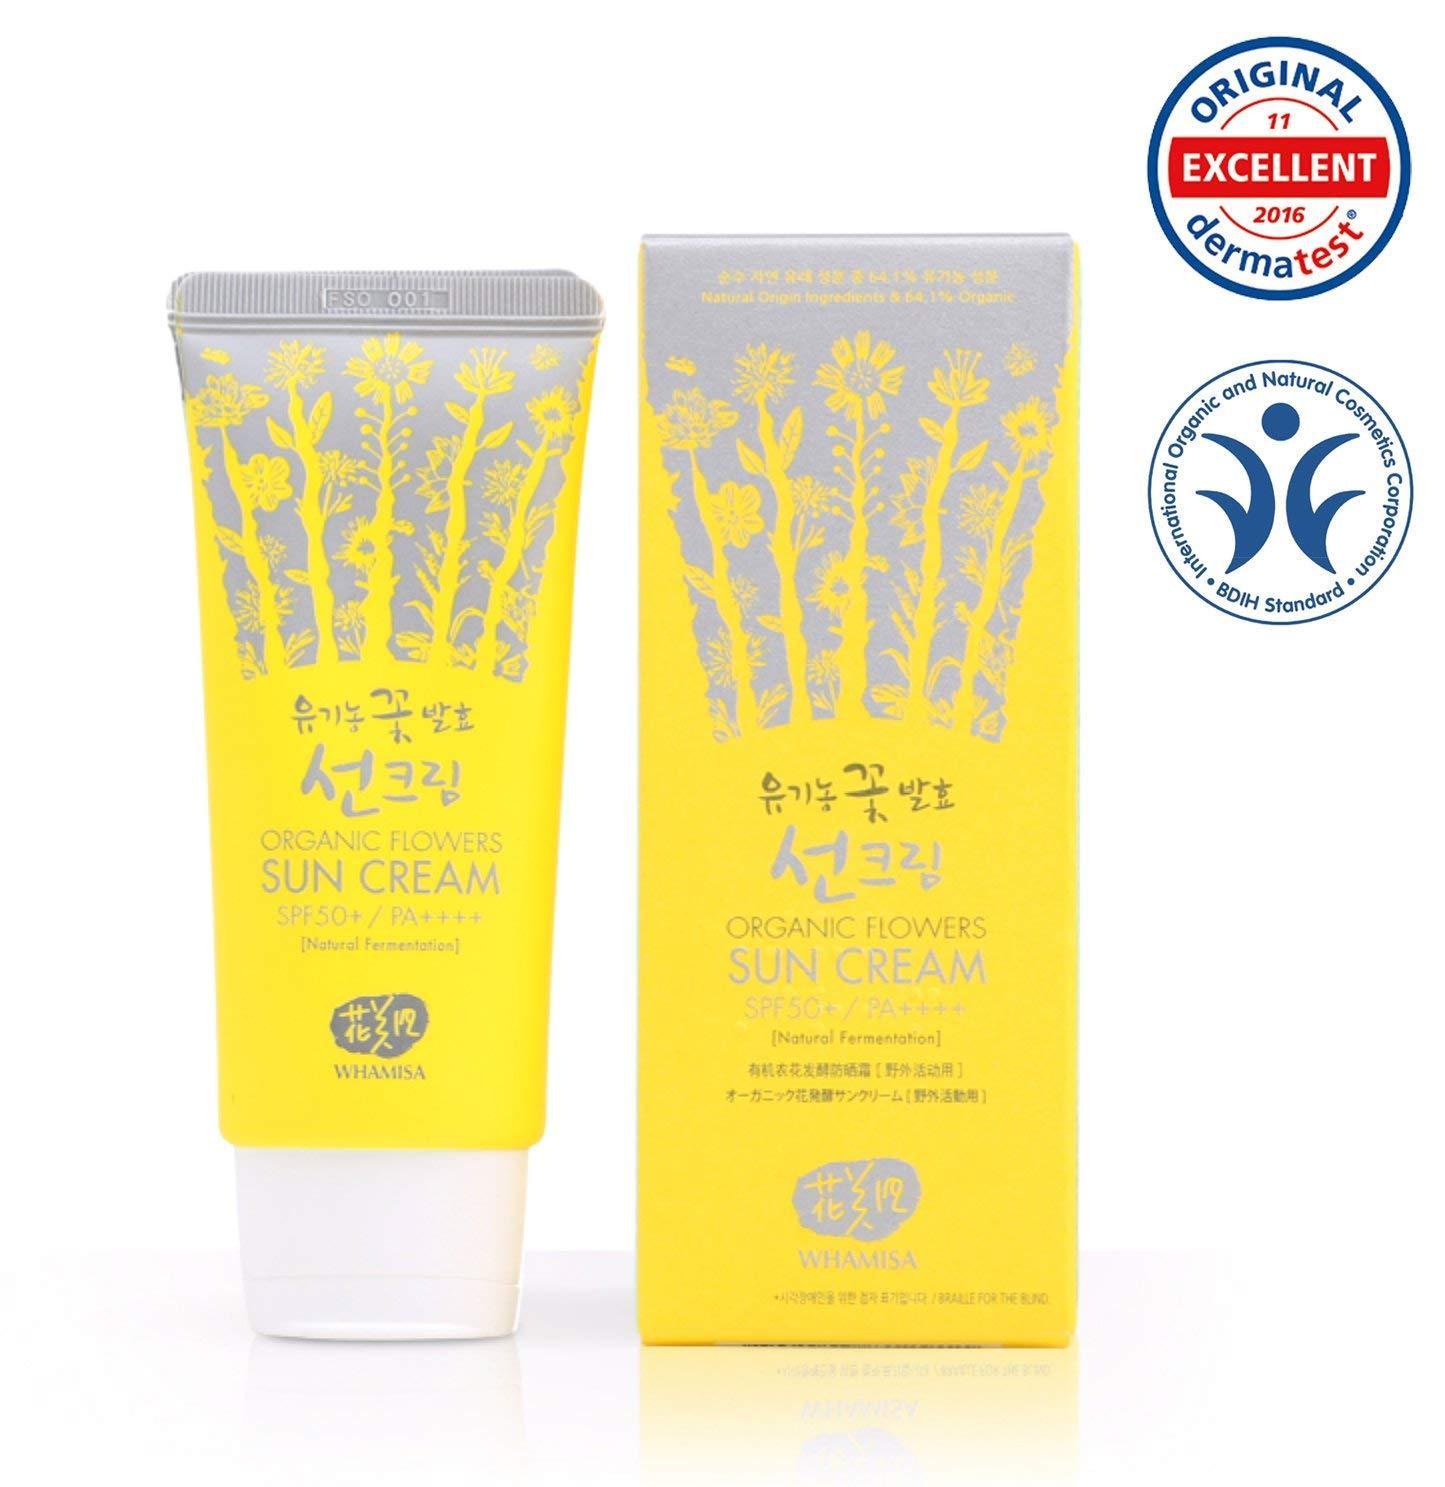 Organic Flowers Sun Cream - SPF 50+ / PA++++ (Natural Fermentation) - Солнцезащитный крем на основе цветочных ферментов SPF 50+ / PA++++